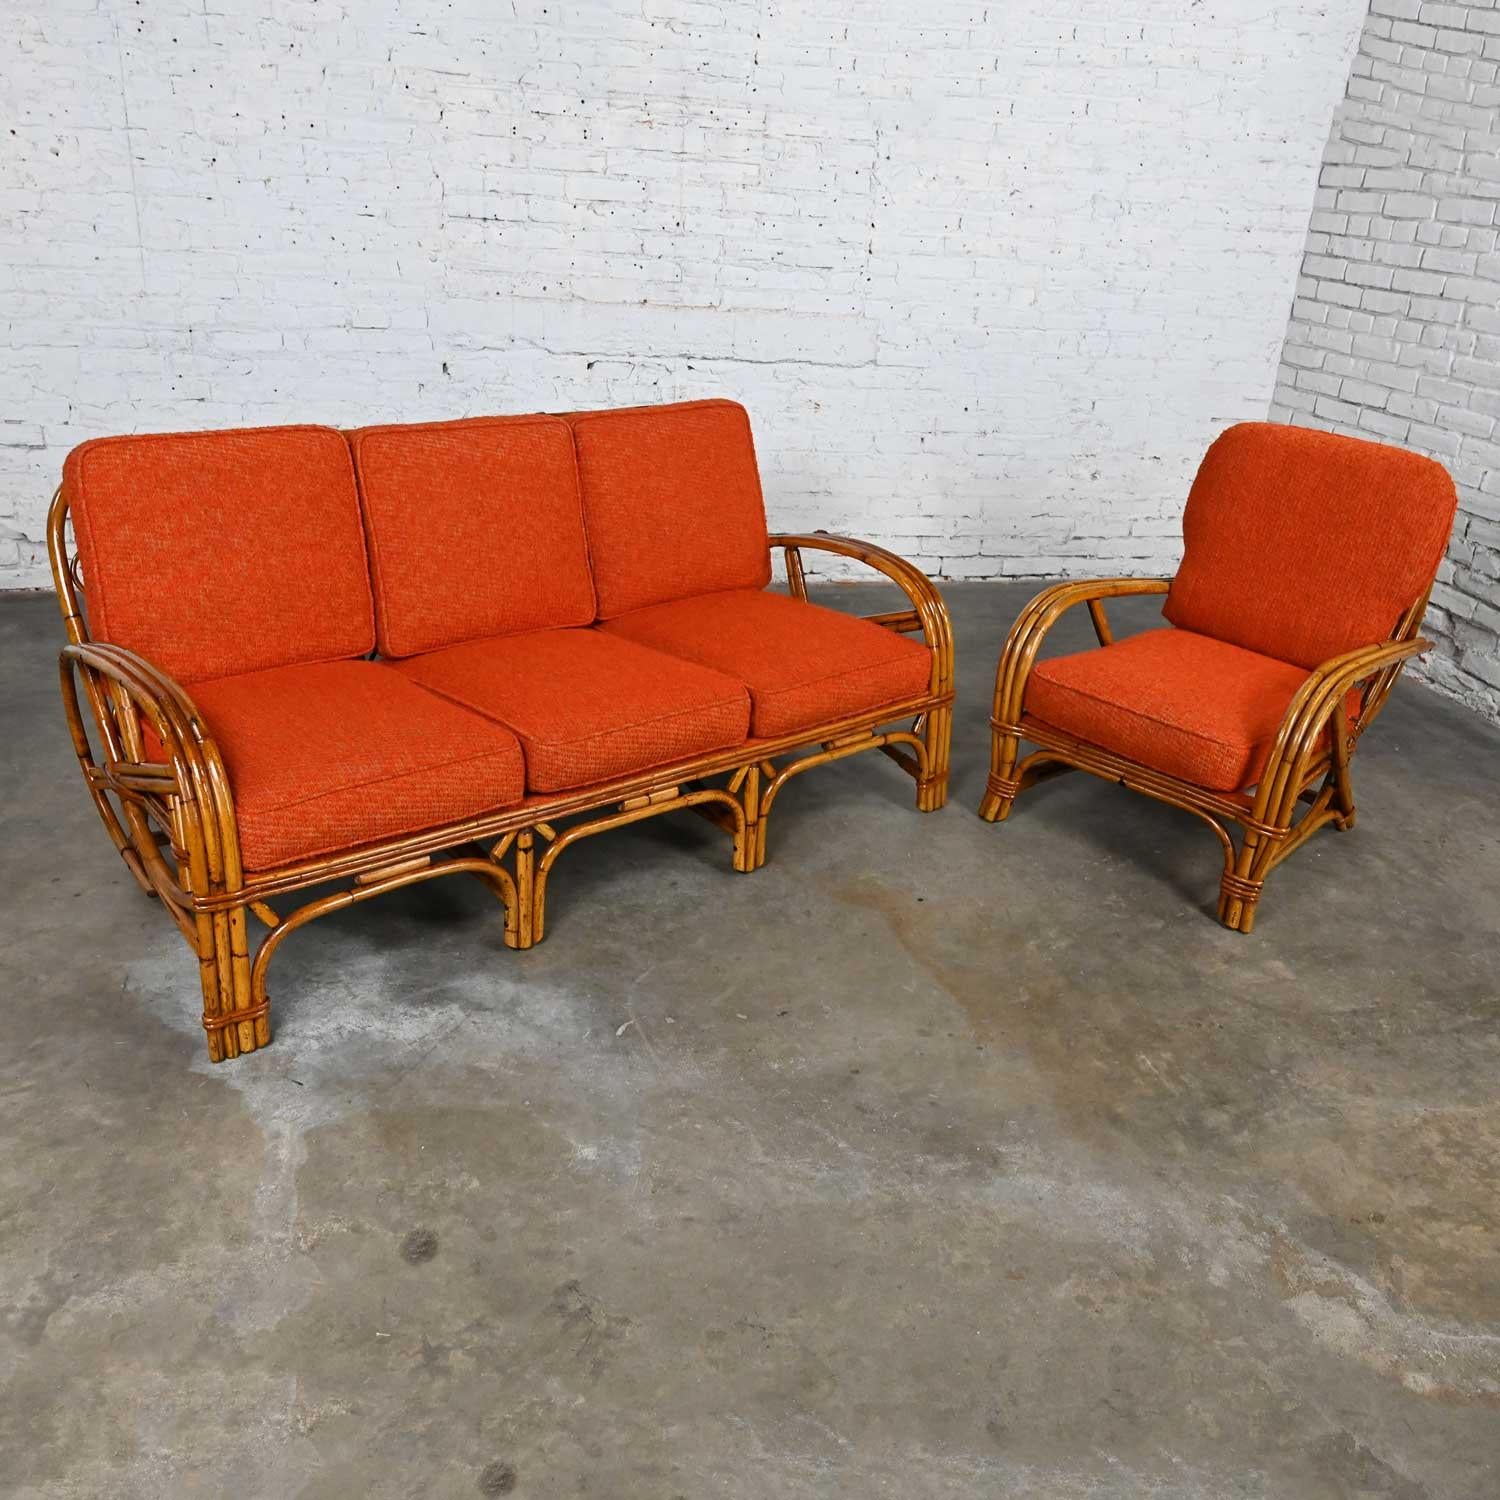 Triple Strand Rattan Sofa & Chair Orange Fabric Cushions Style Heywood Wakefield For Sale 9